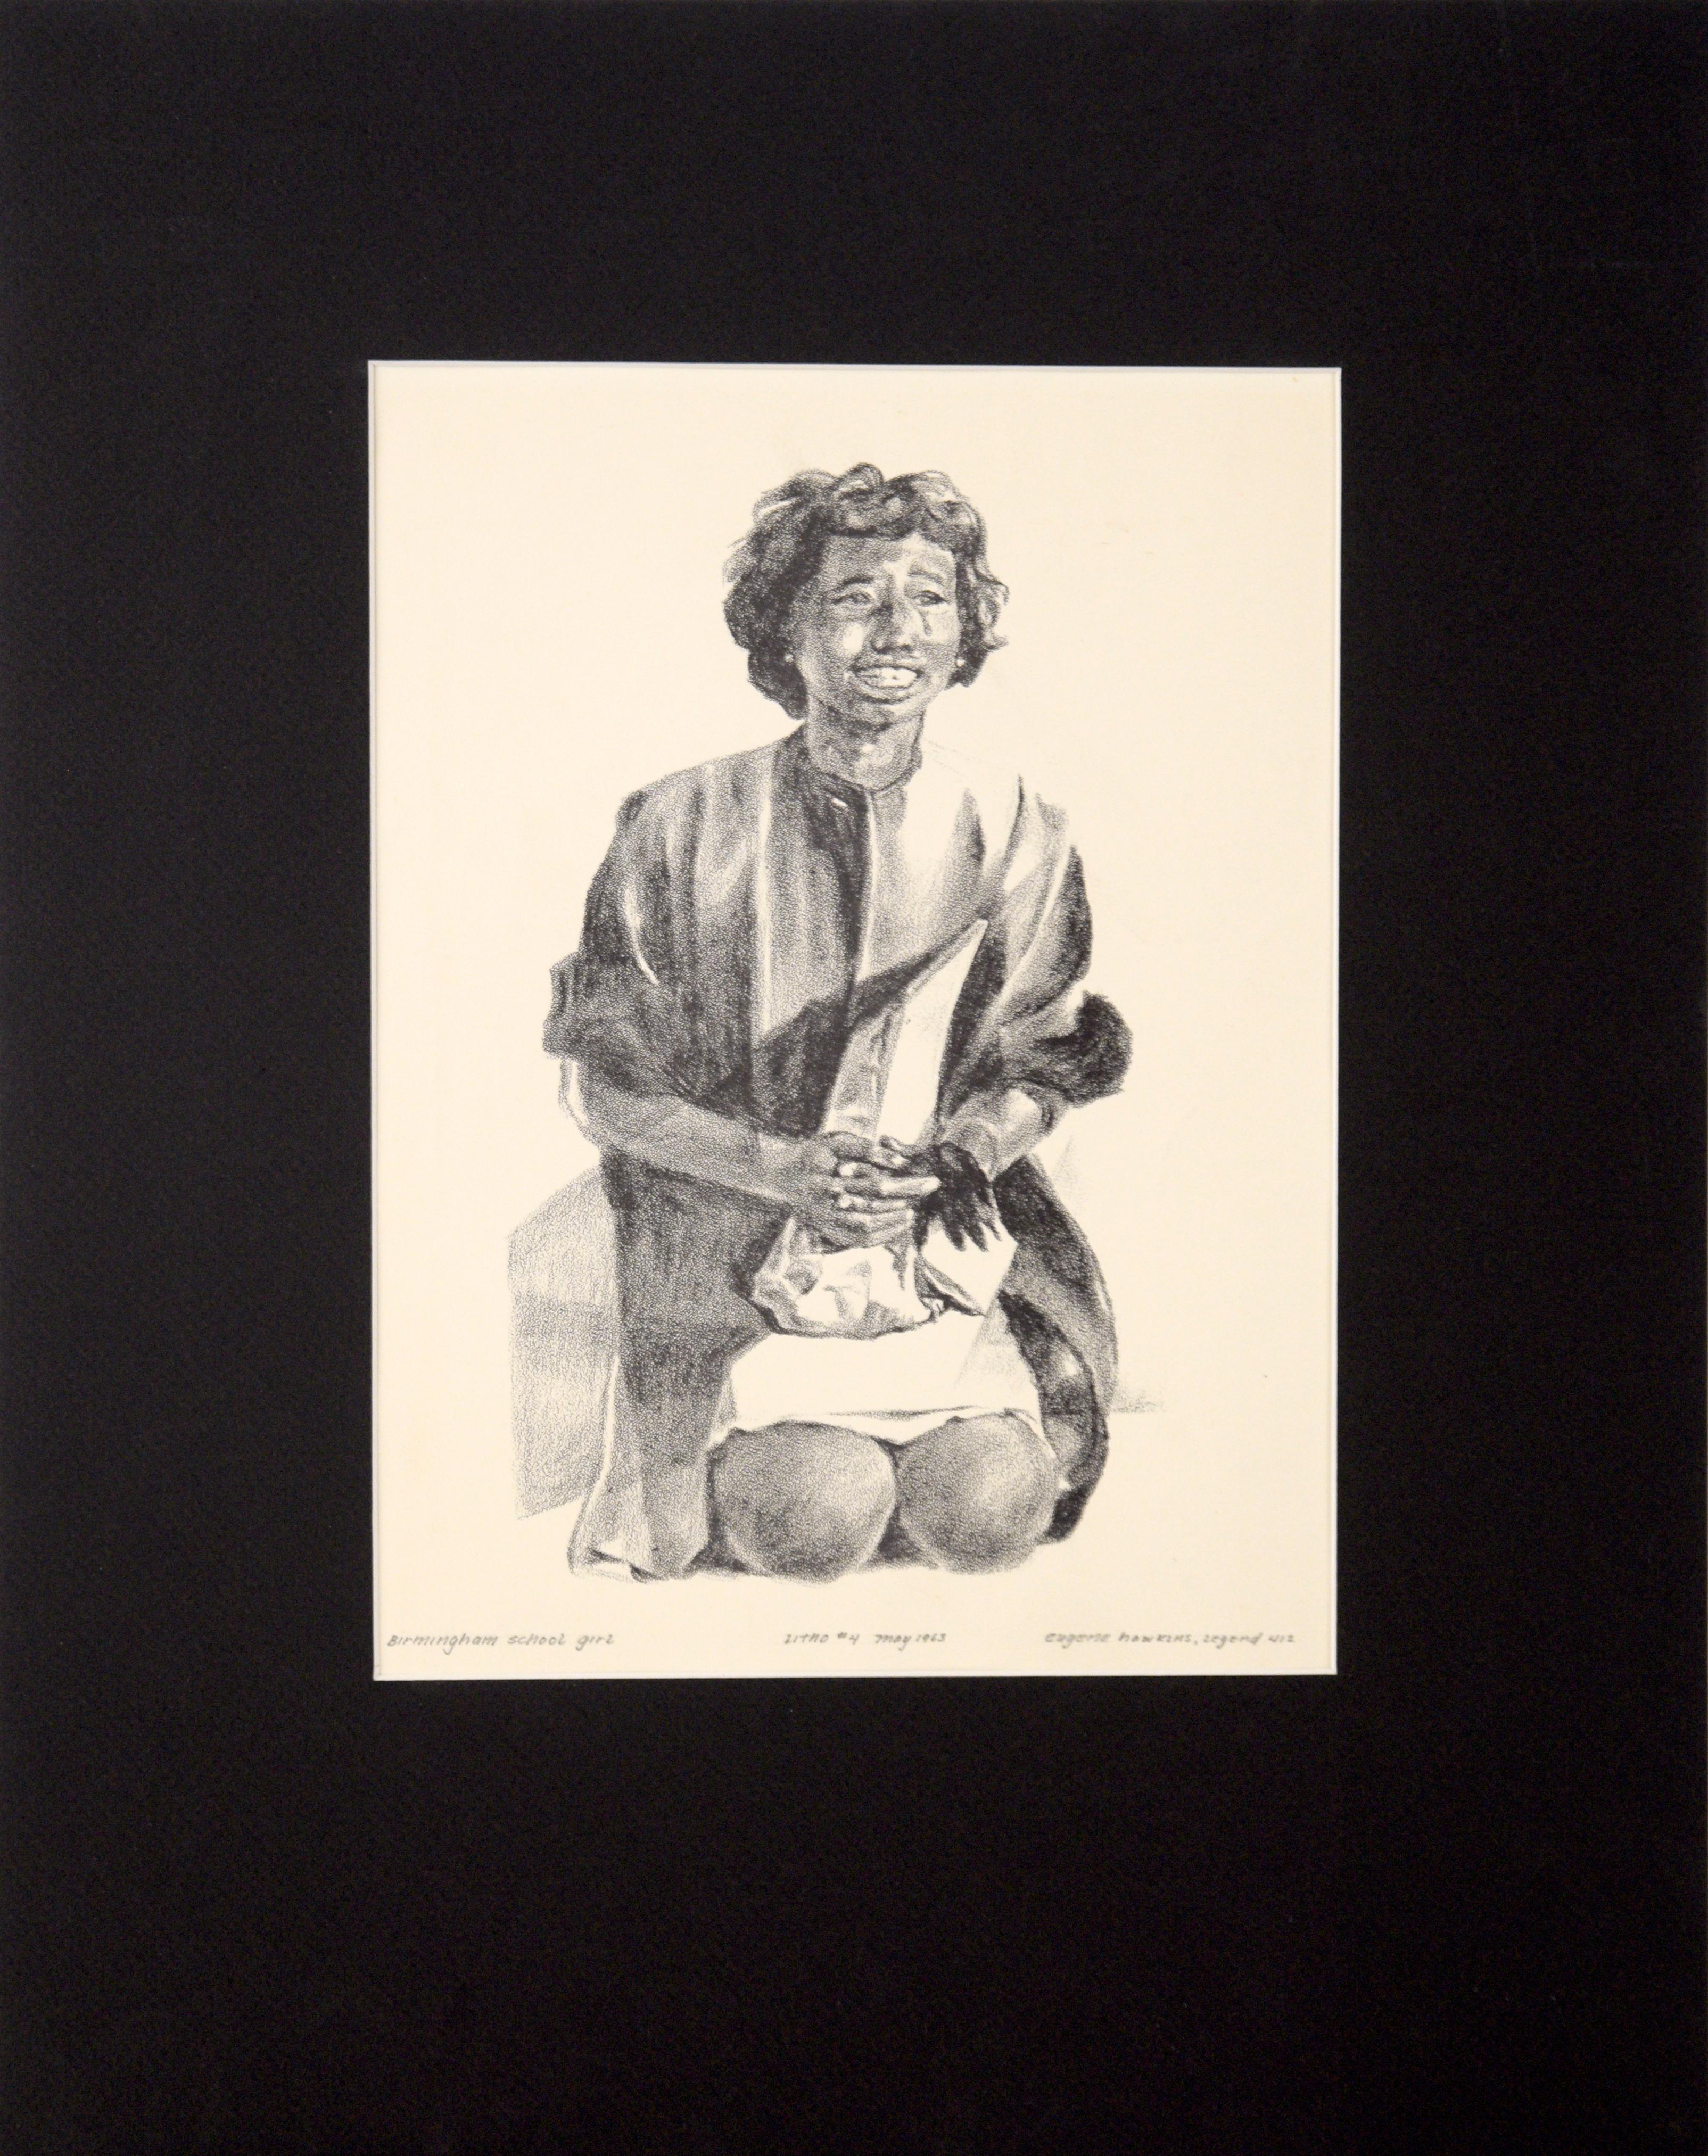 Eugene Hawkins Figurative Print - "Birmingham School Girl" - Rare Signed Figurative Lithograph in Ink on Paper